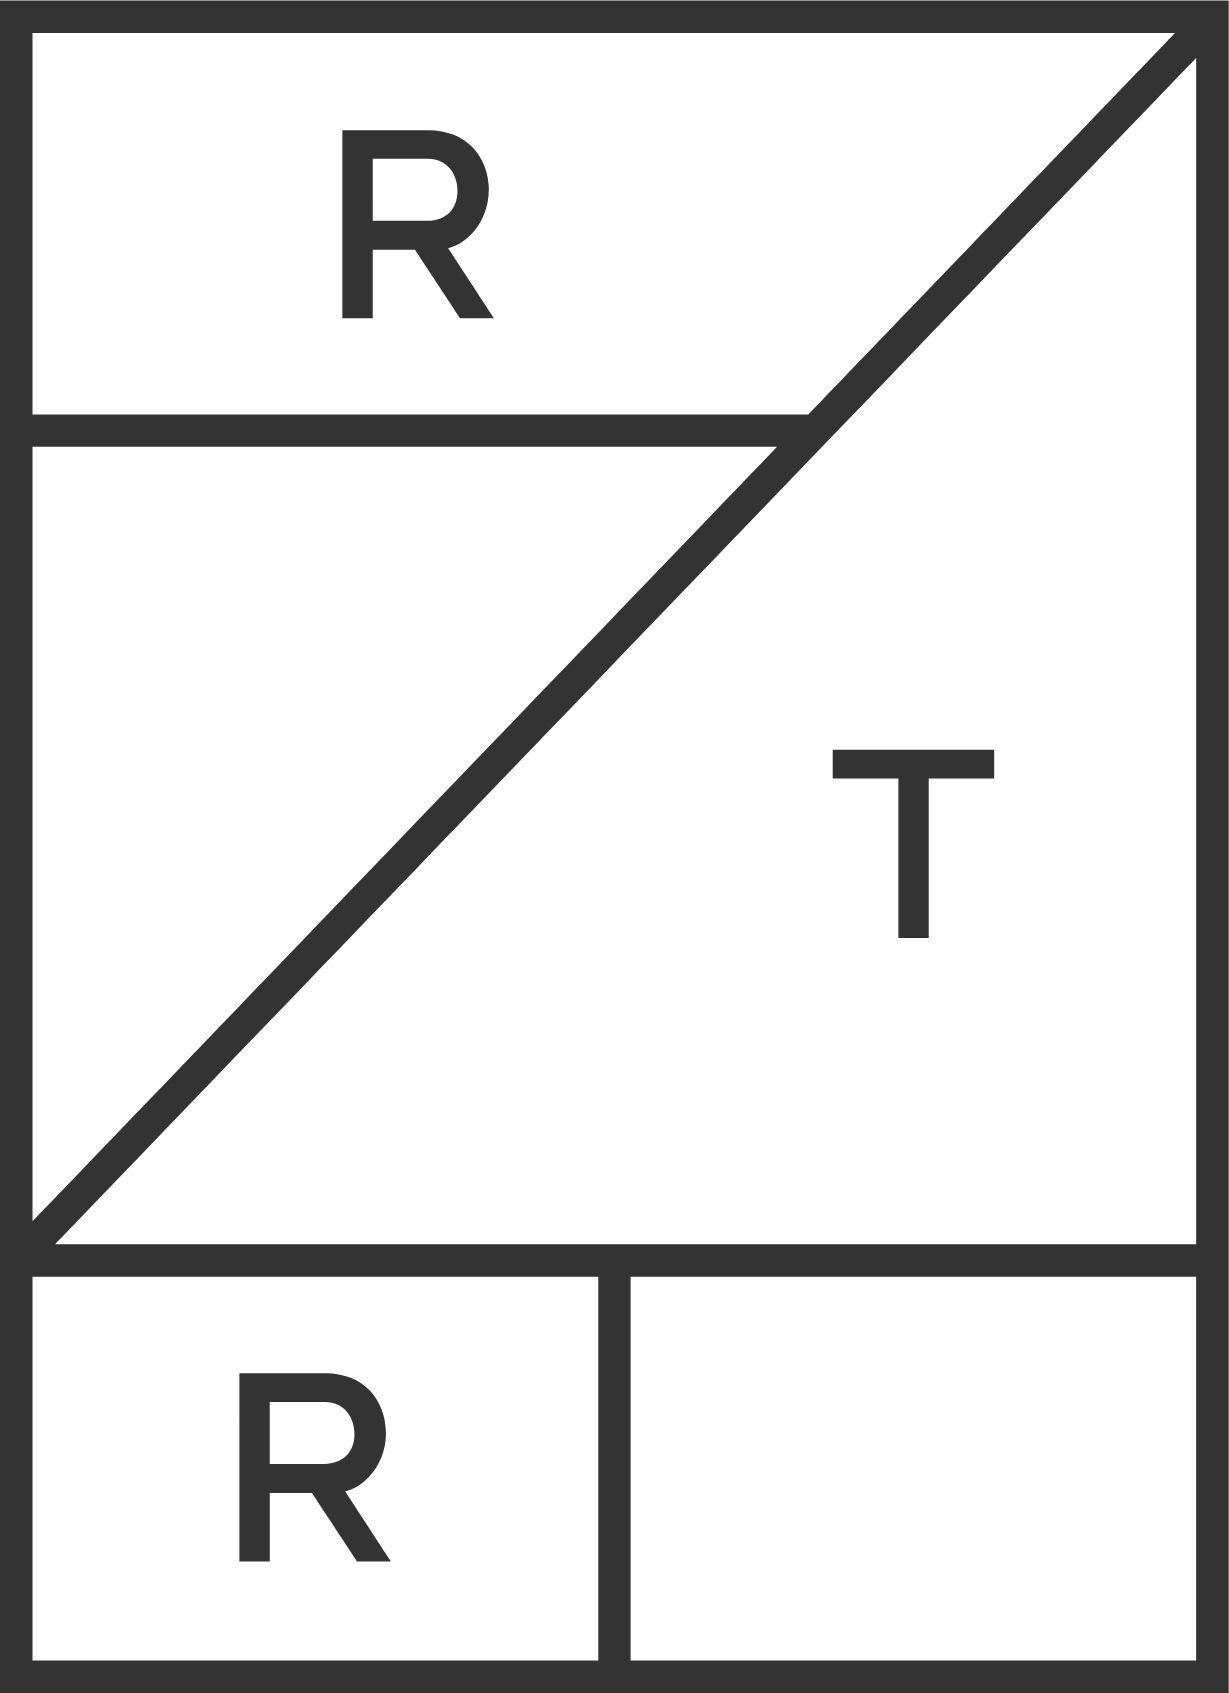 Rent the Runway logo (transparent PNG)